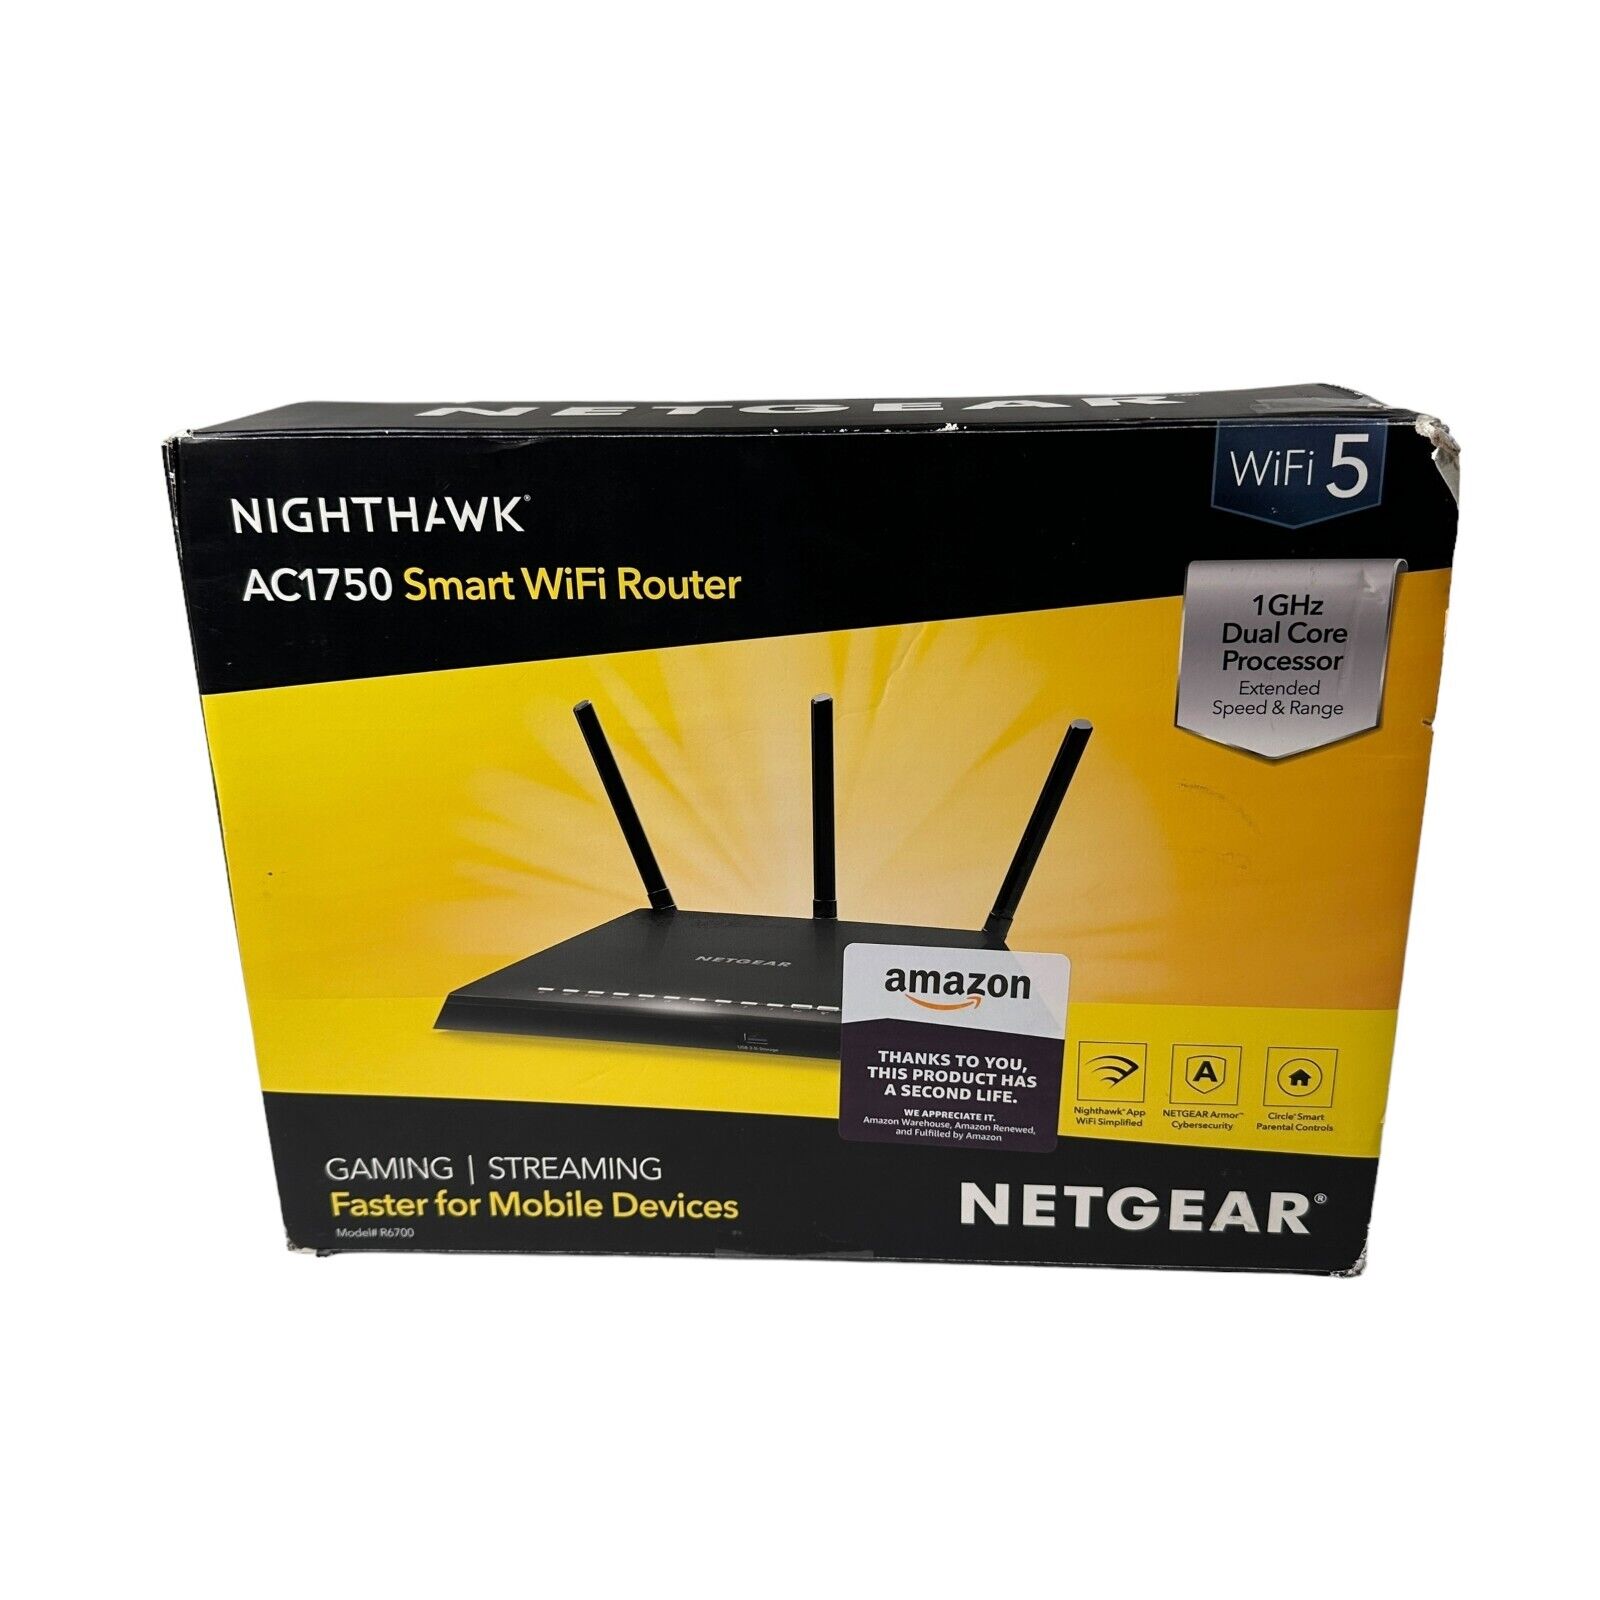 NETGEAR R7600 Nighthawk AC1750 Smart WiFi Router-R6700-100NAS- NO ADAPTER (READ)